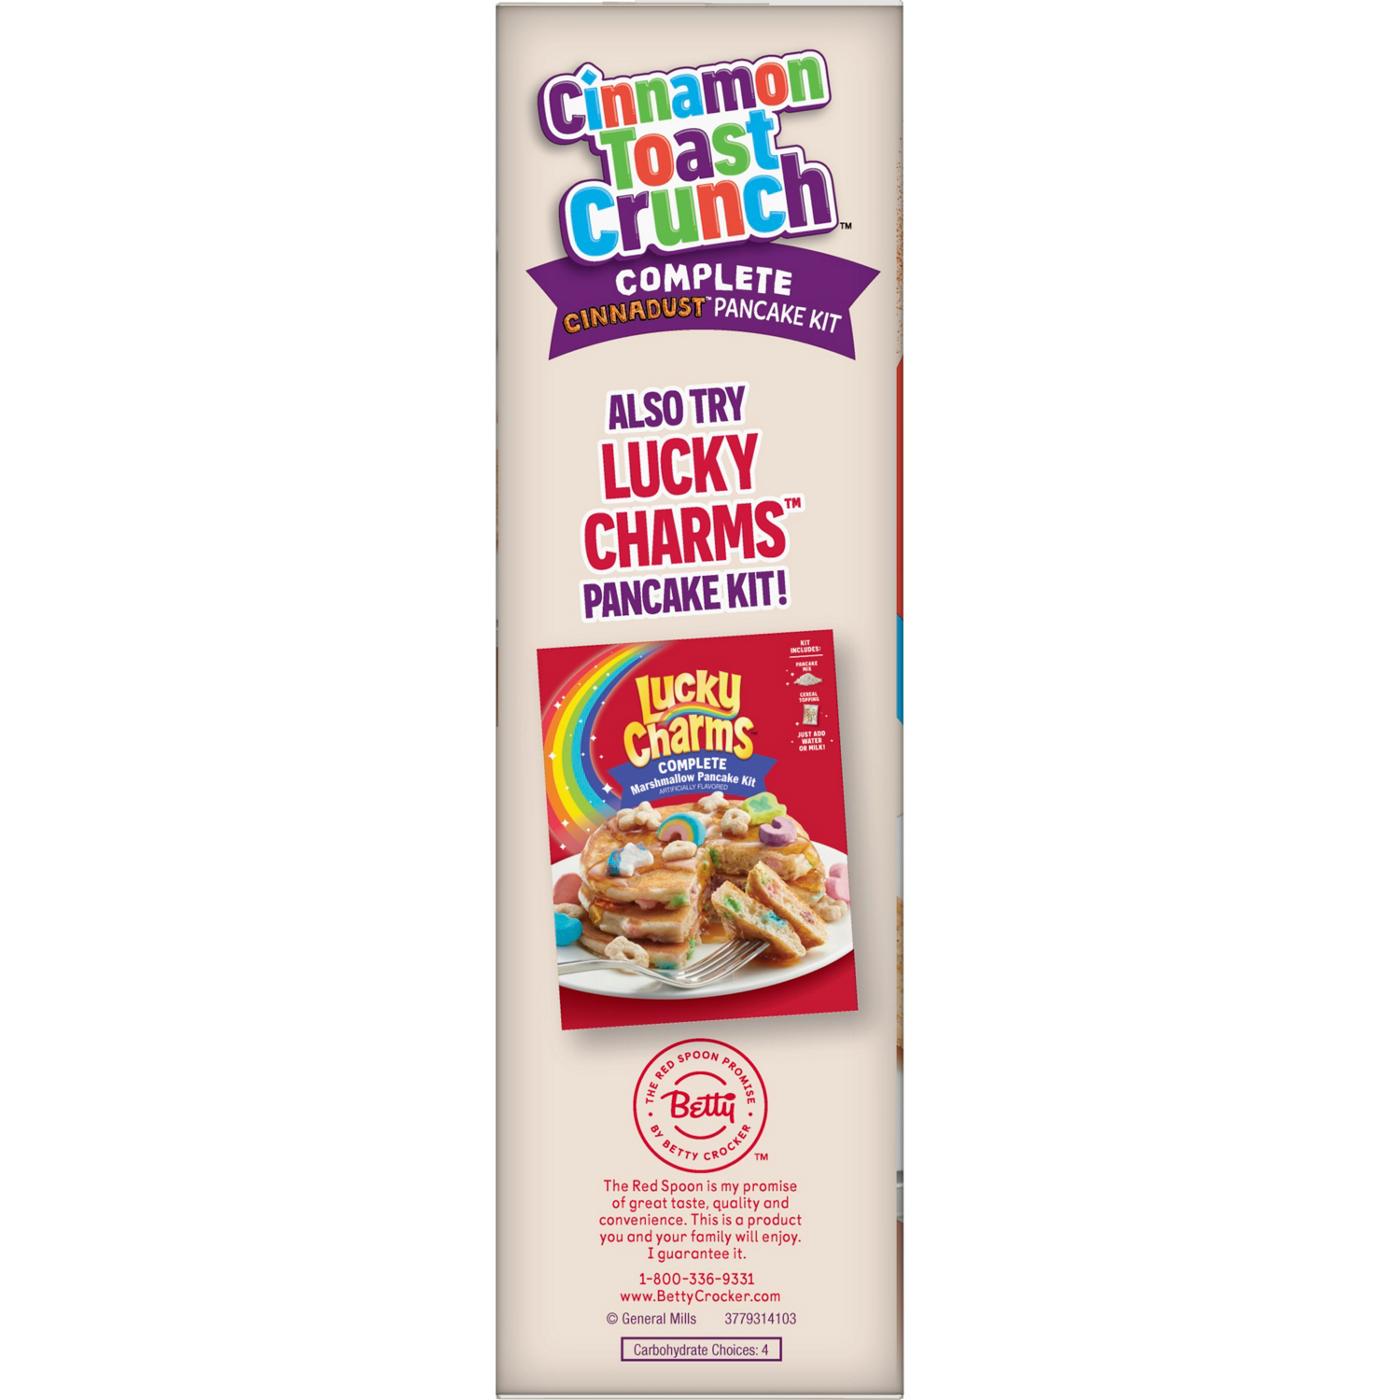 Betty Crocker Cinnamon Toast Crunch Cinnadust Pancake Kit; image 4 of 4